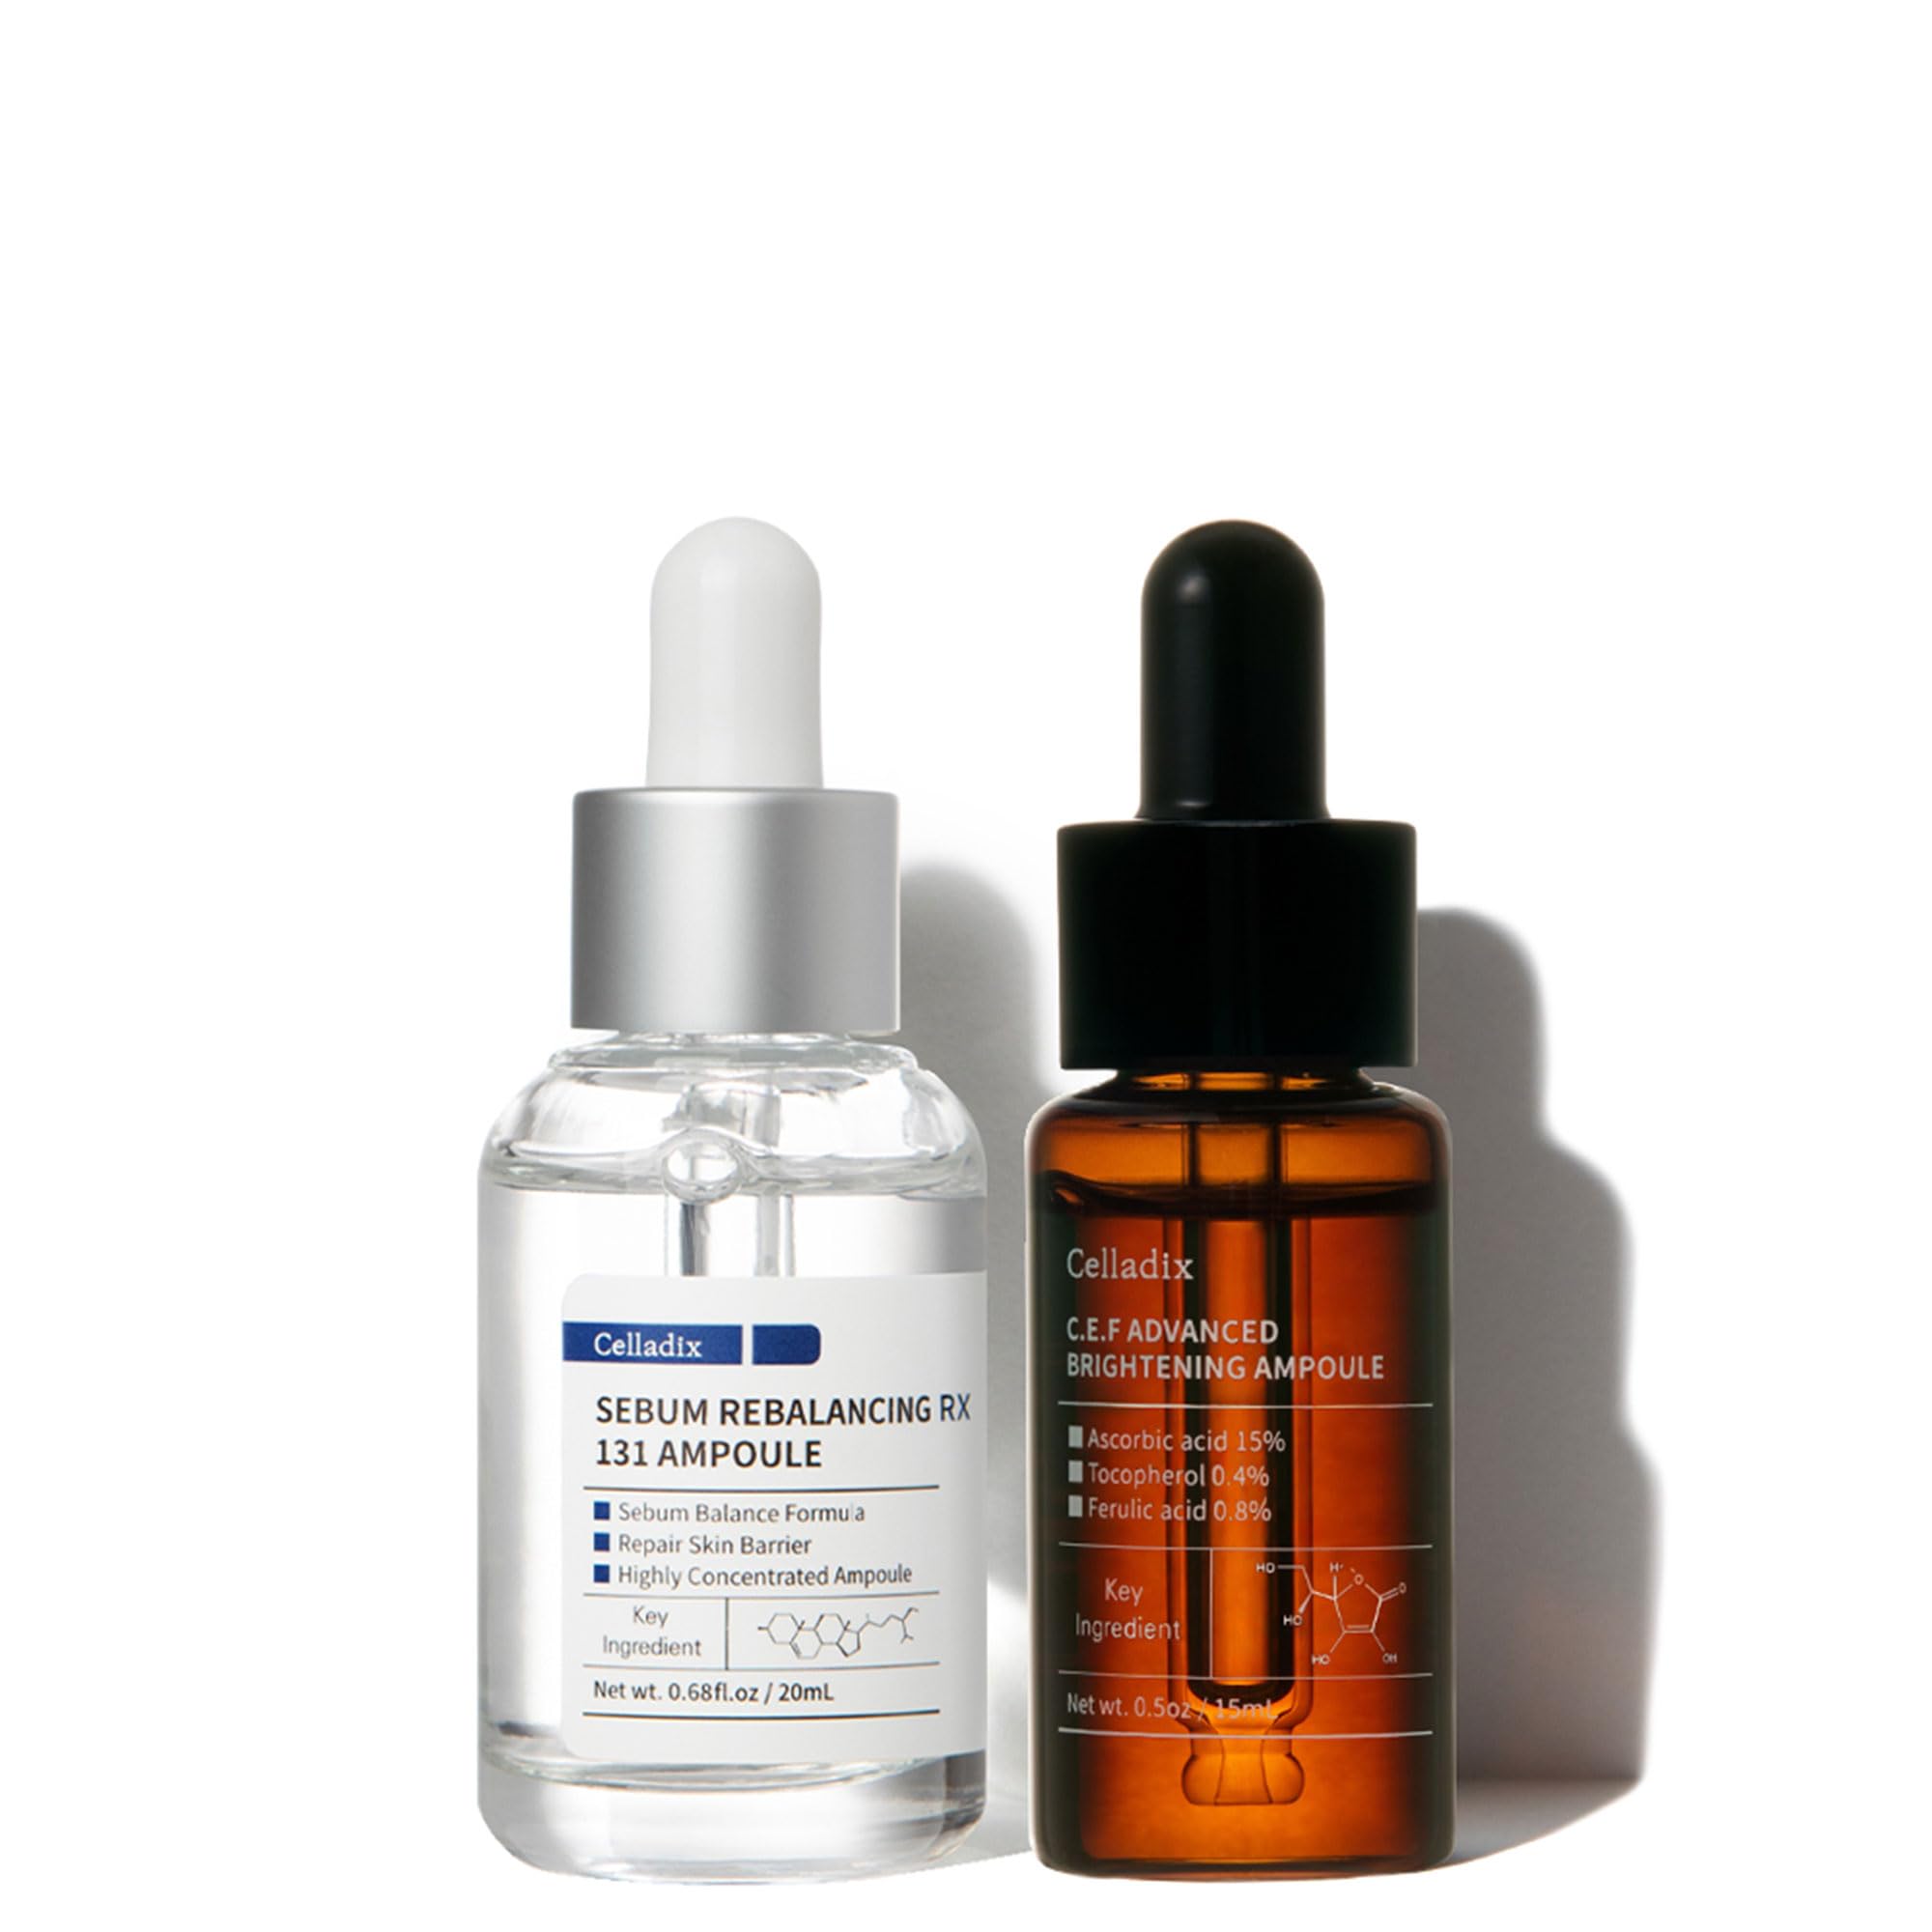 Ampoule Care Duo Set - Suitable for Acne, Certified Derma-Test, Rebalances Skin Sebum and Pores, Includes Pure Vitamin C 1%